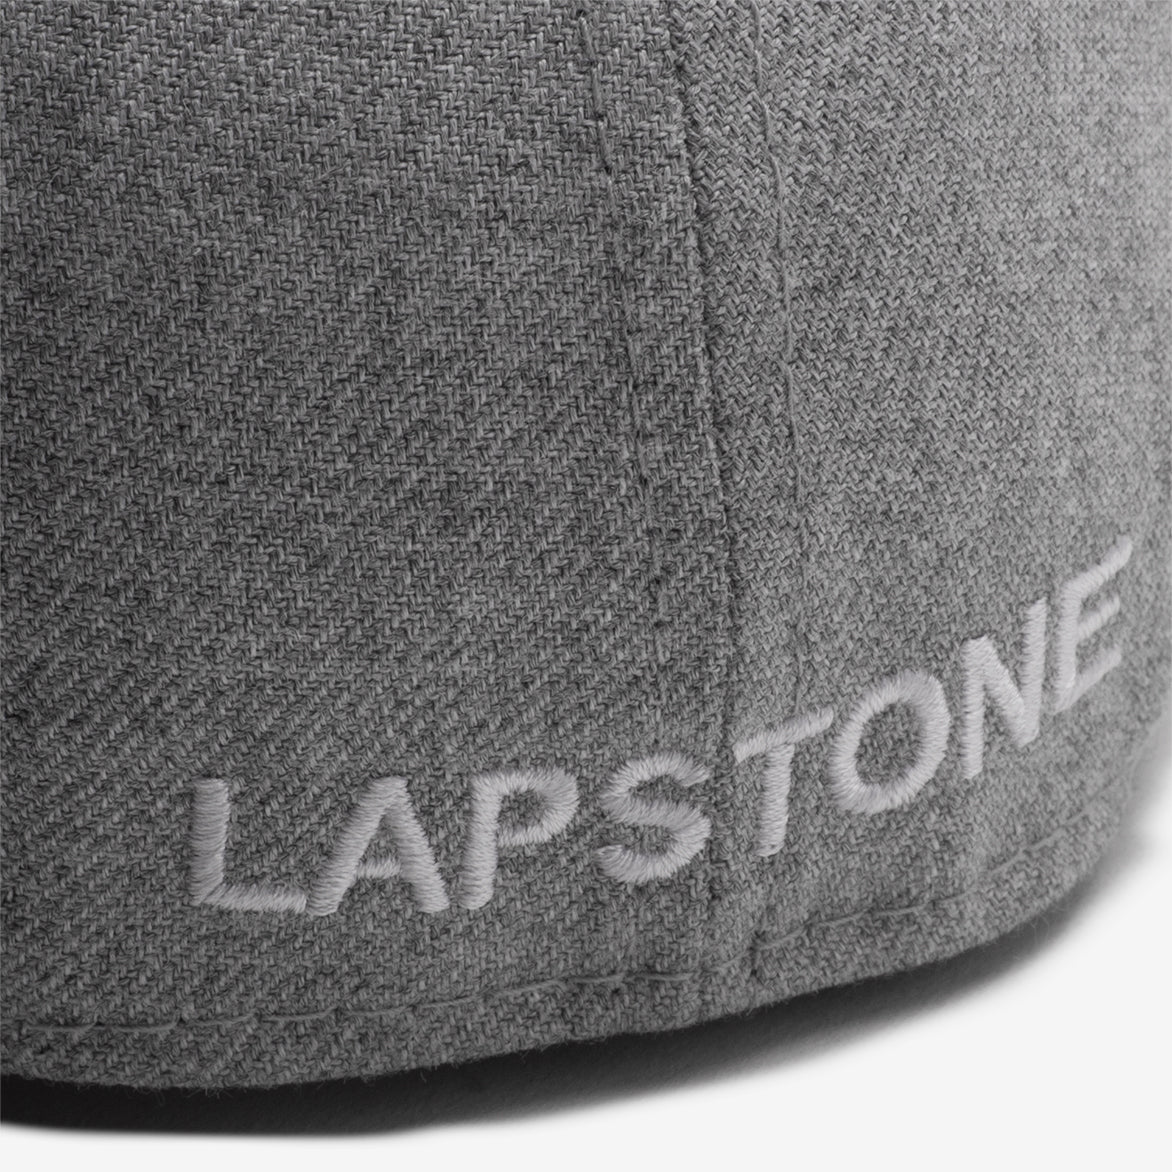 LAPSTONE X NEW ERA LOW PROFILE 5950 CAP - HEATHER GREY